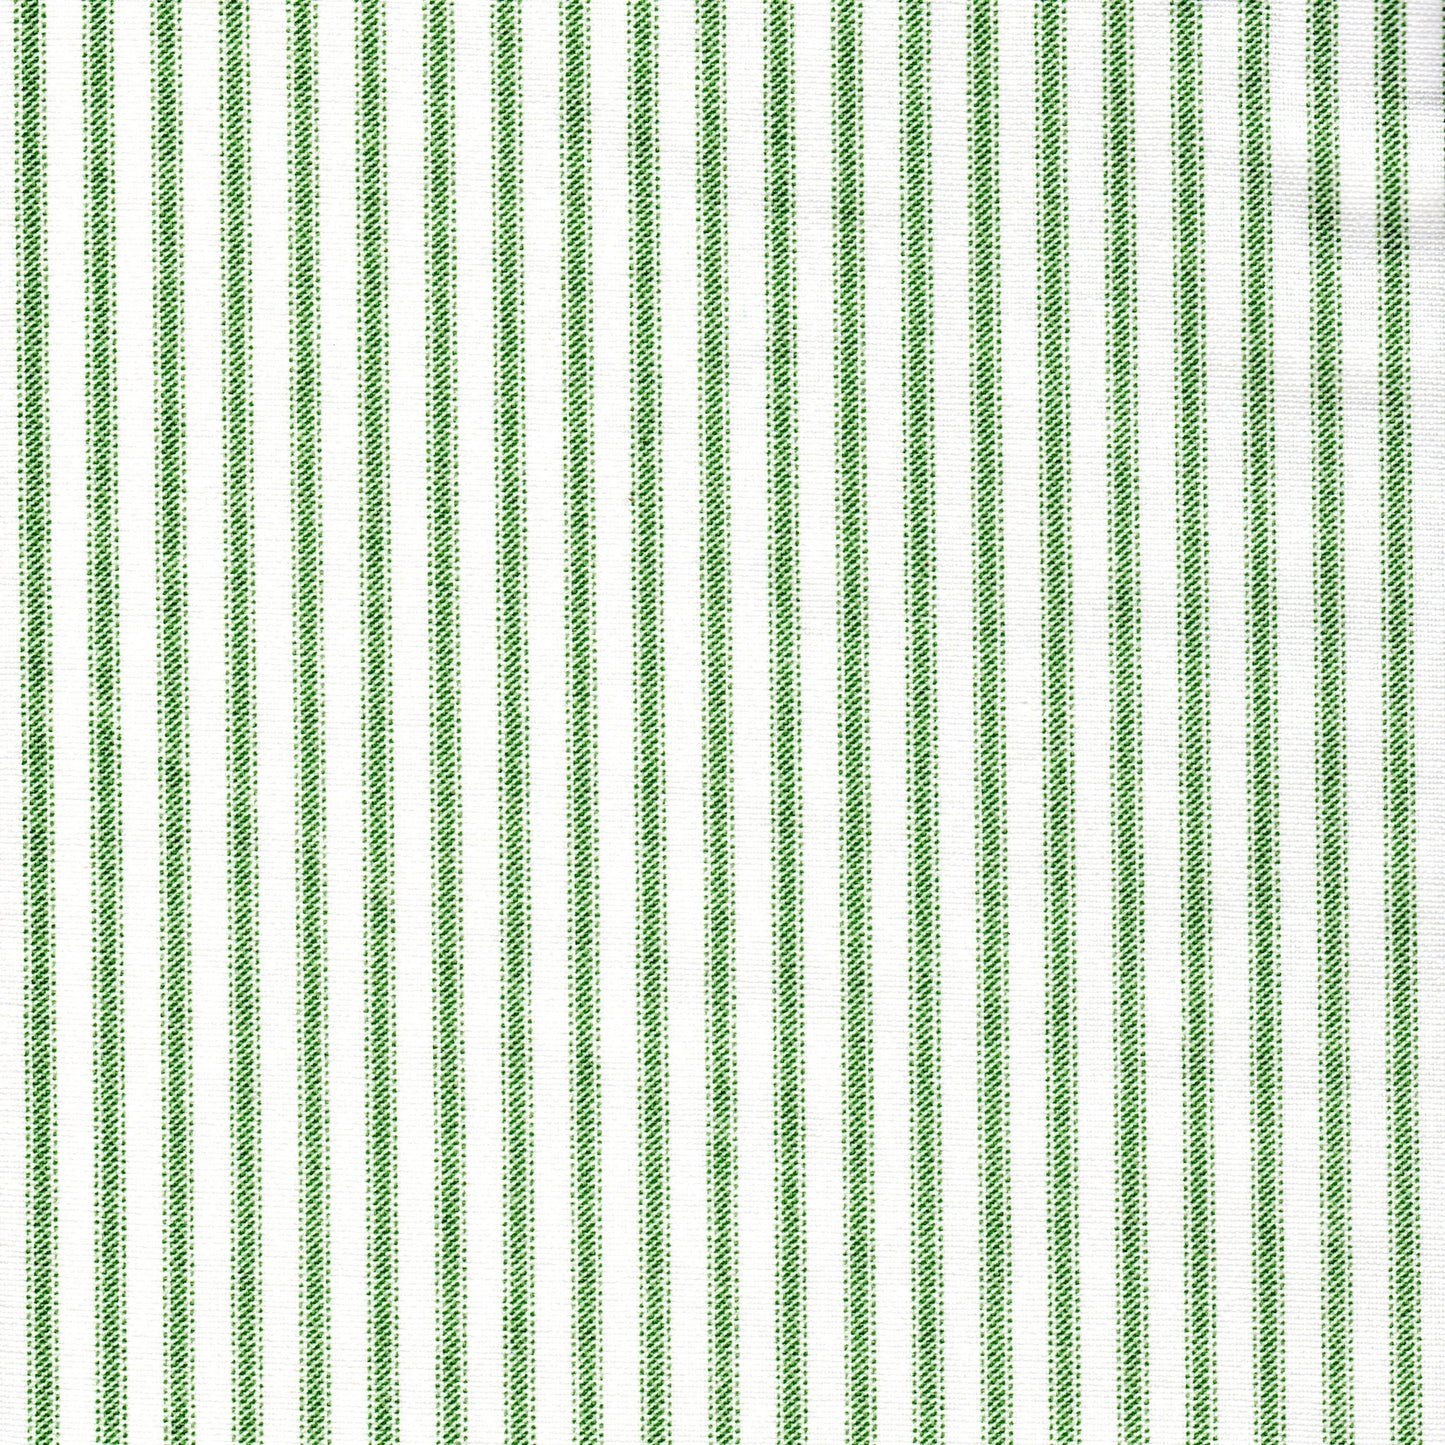 Bed Runner in Classic Pine Green Ticking Stripe on White